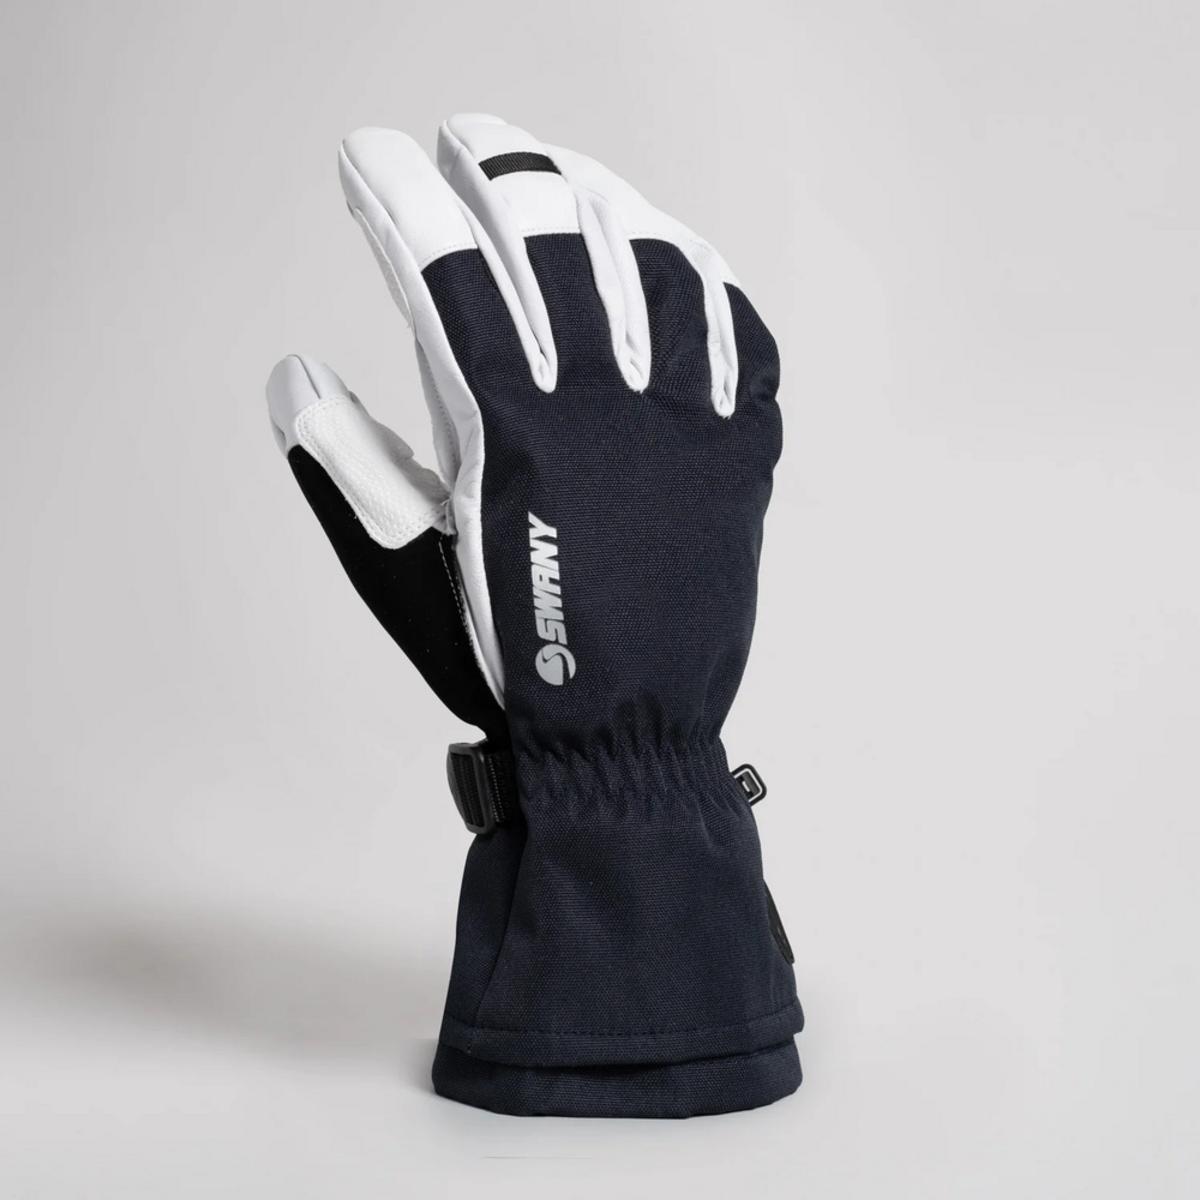 Swany Women's 970 3N1 Gloves 2.3